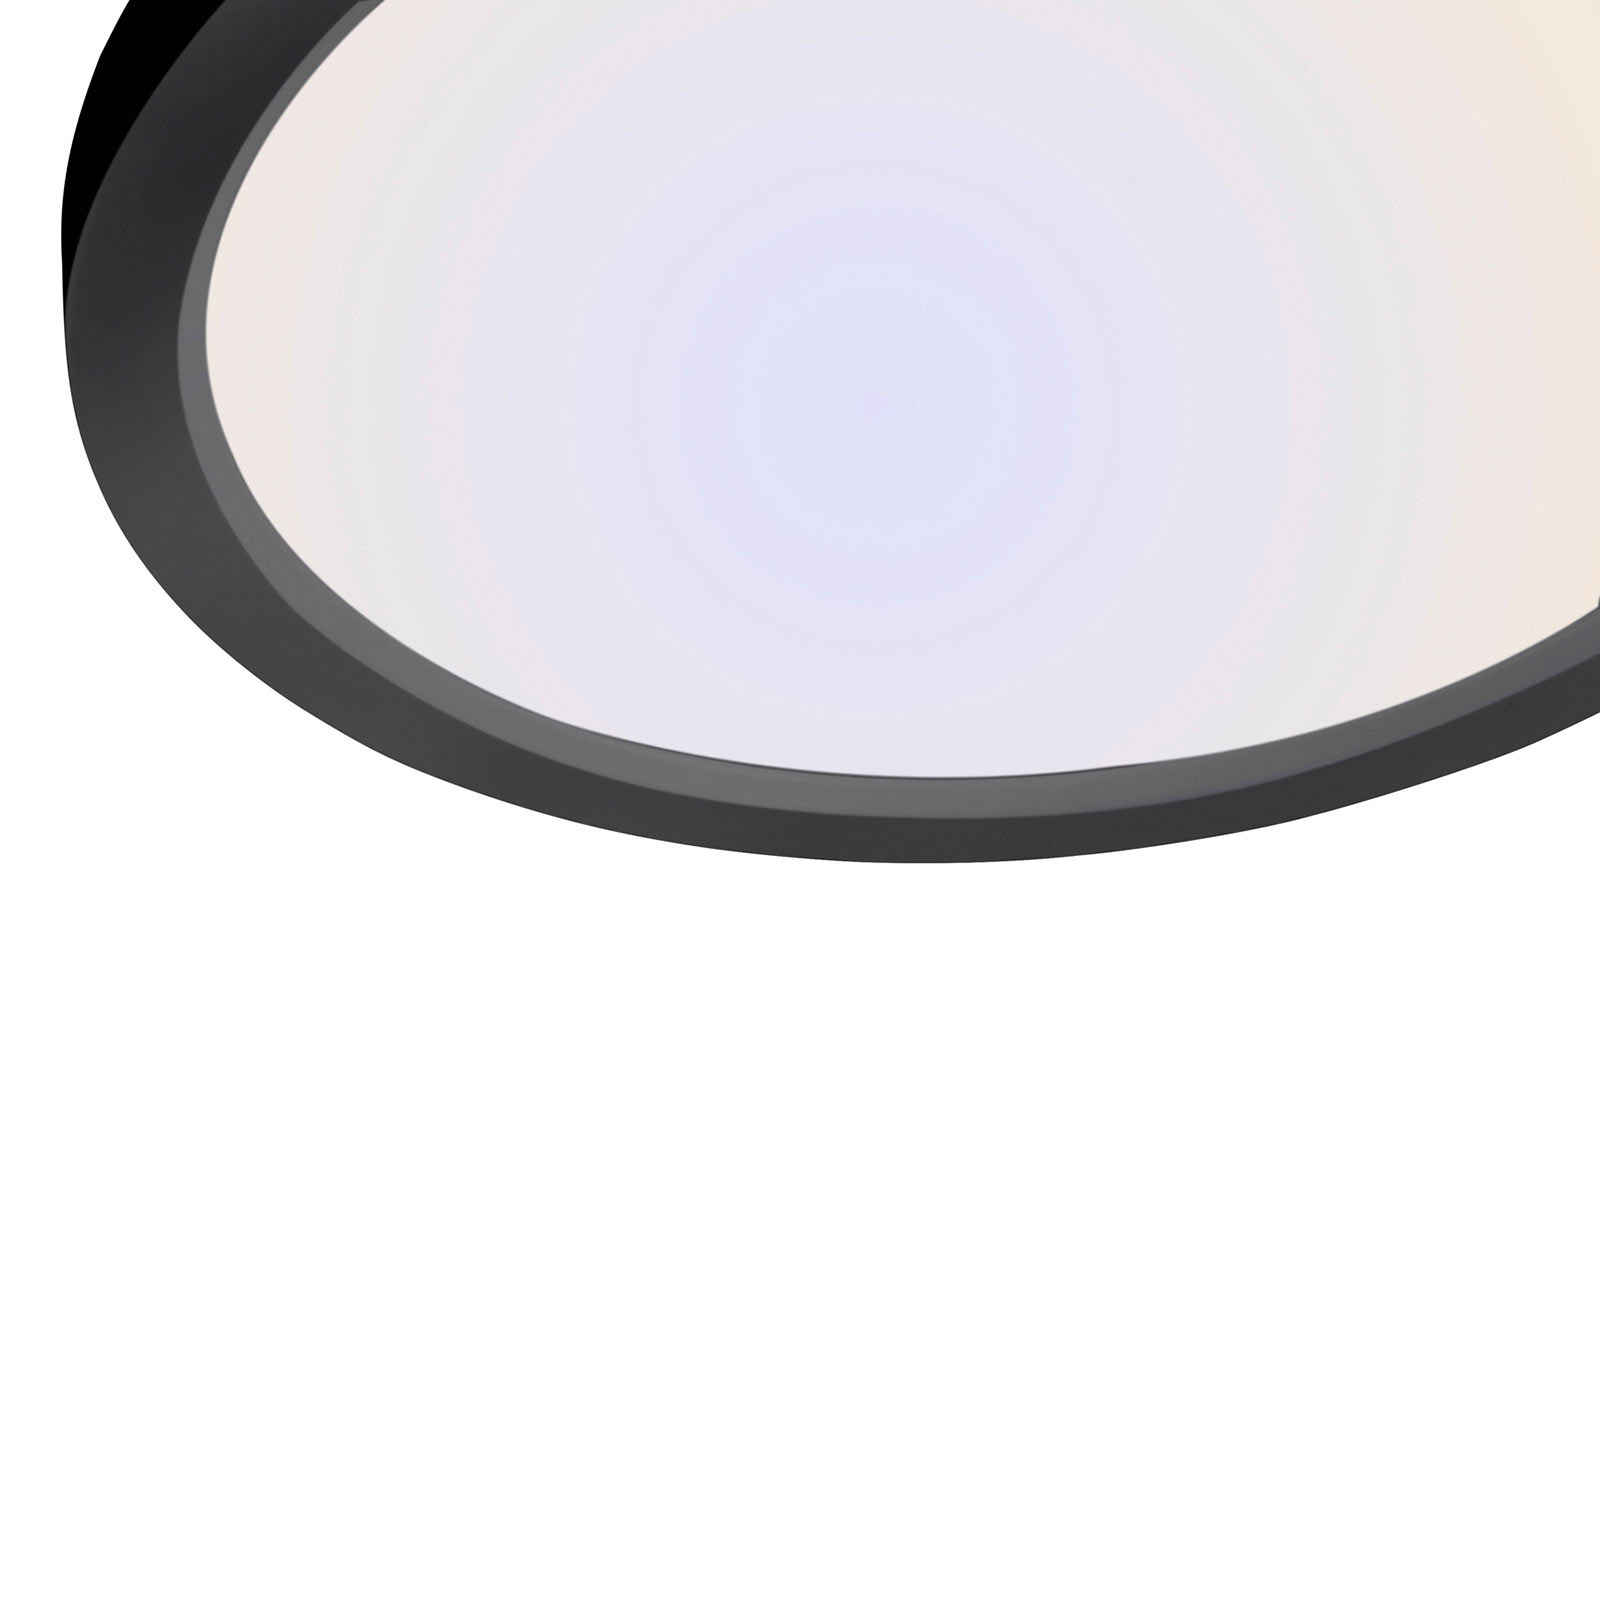 Stropné LED svetlo Flat CCT, Ø 40 cm, čierna